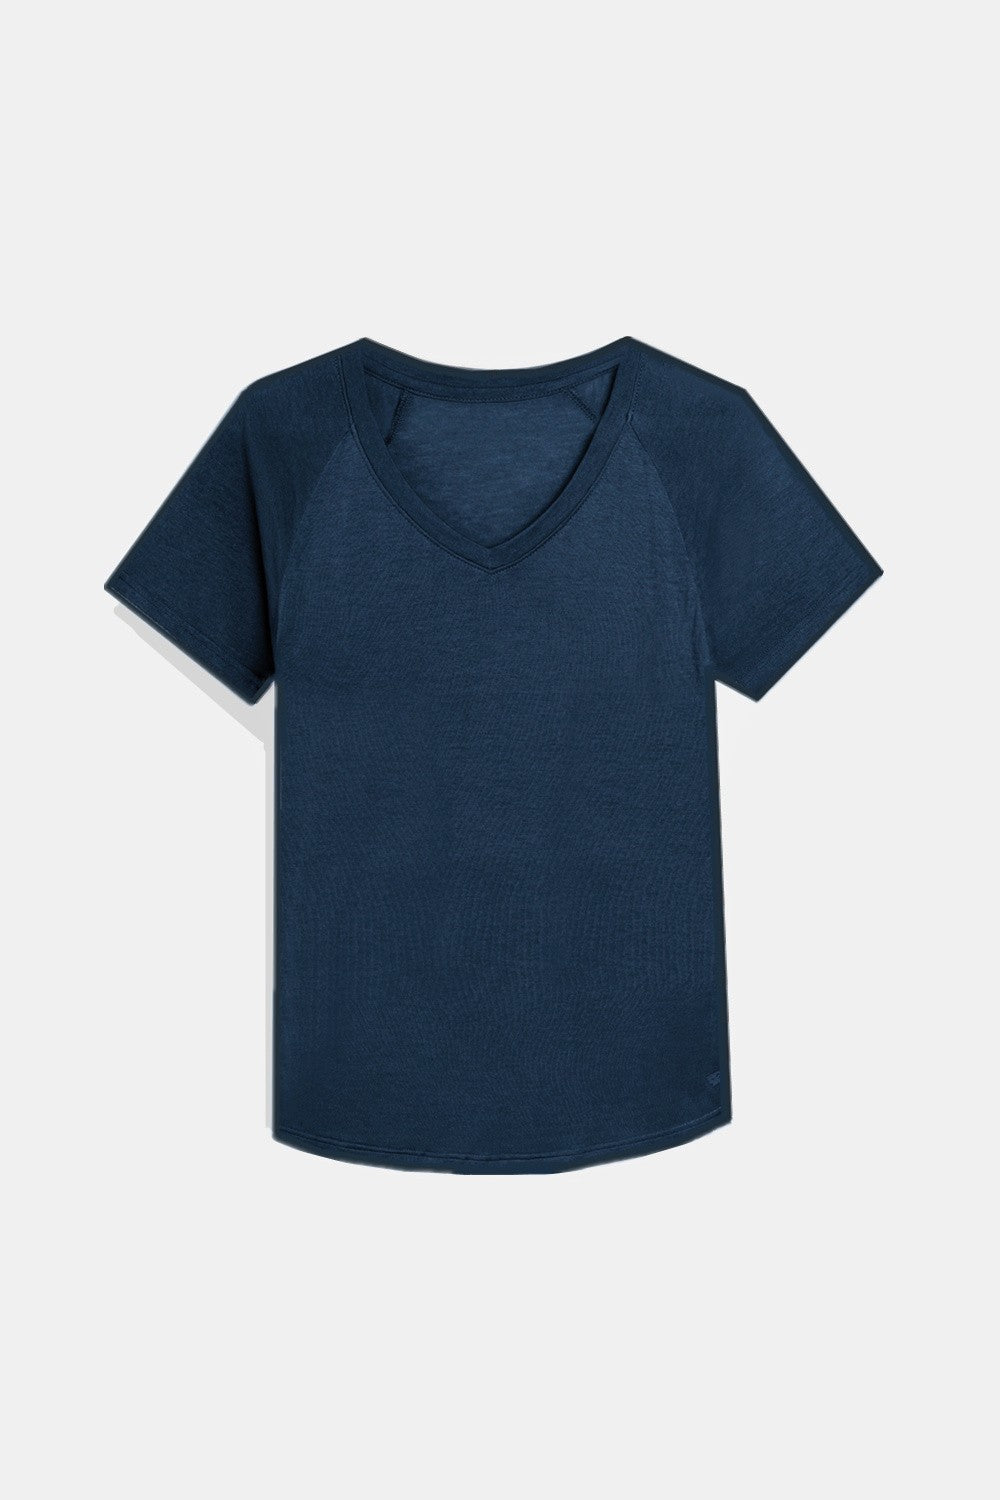 Women's Merino Wool Tencel Short Sleeve Top - Navy Blue